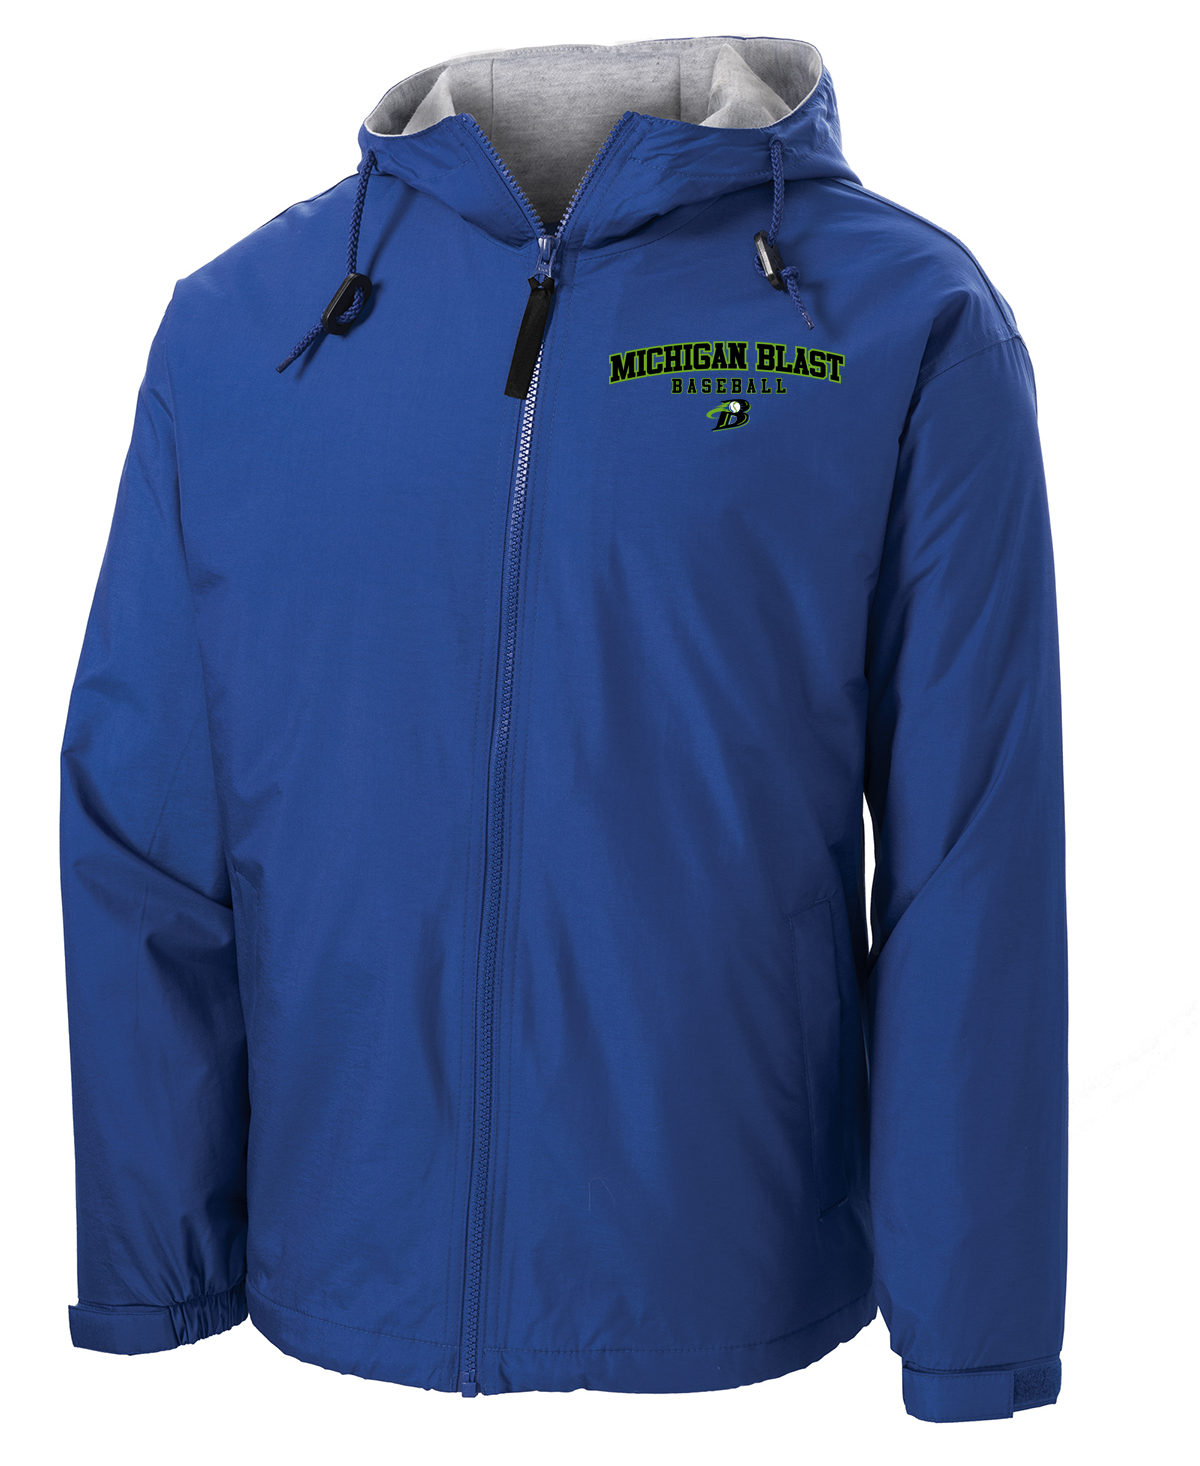 Michigan Blast Elite Baseball Hooded Jacket